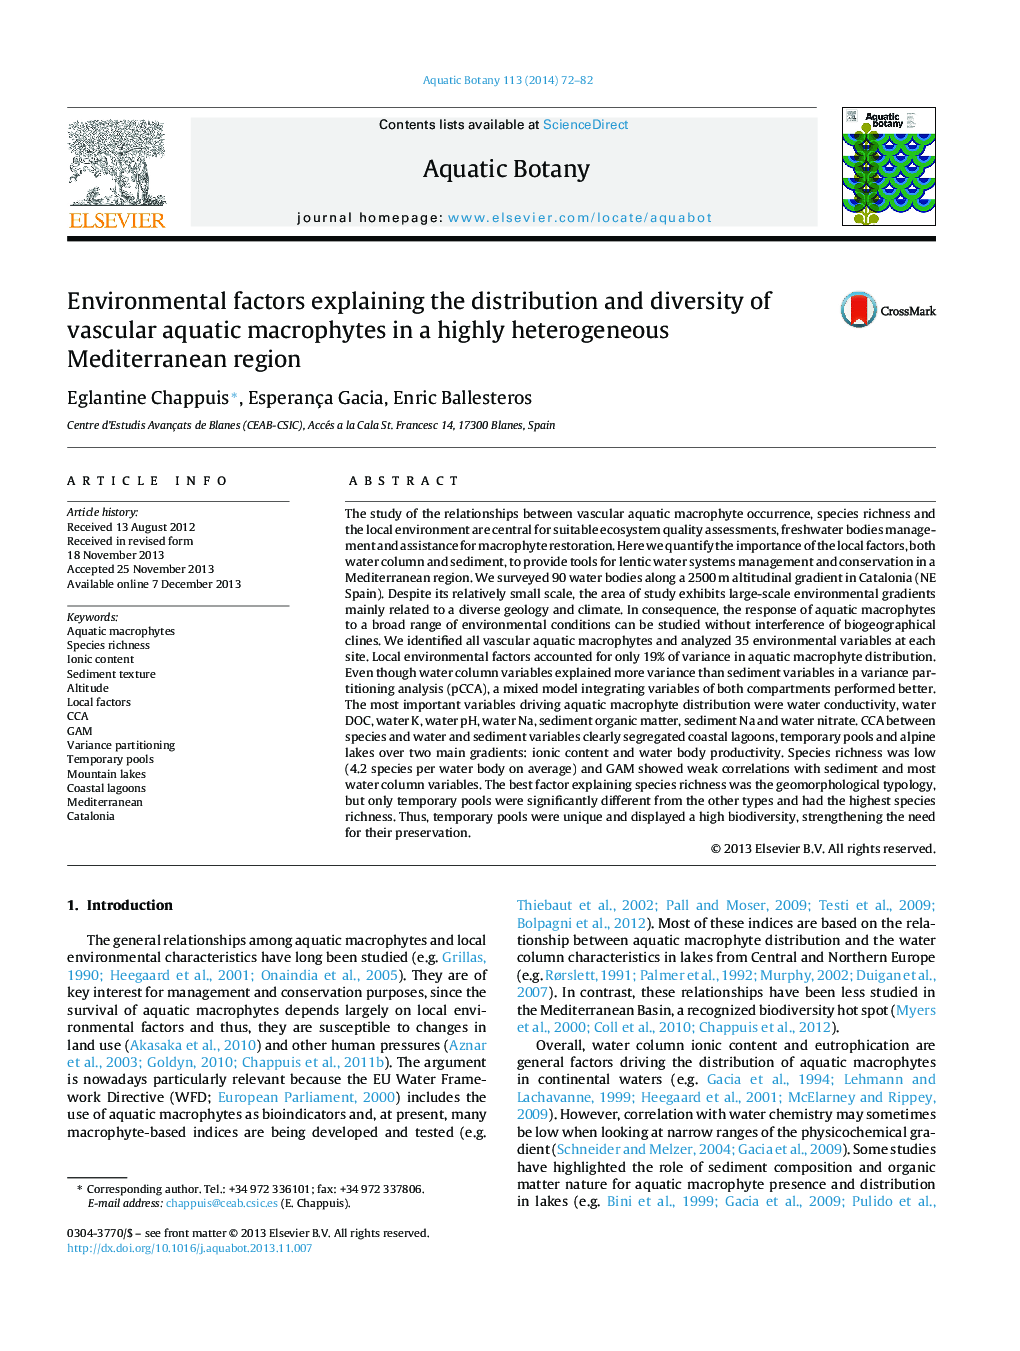 Environmental factors explaining the distribution and diversity of vascular aquatic macrophytes in a highly heterogeneous Mediterranean region